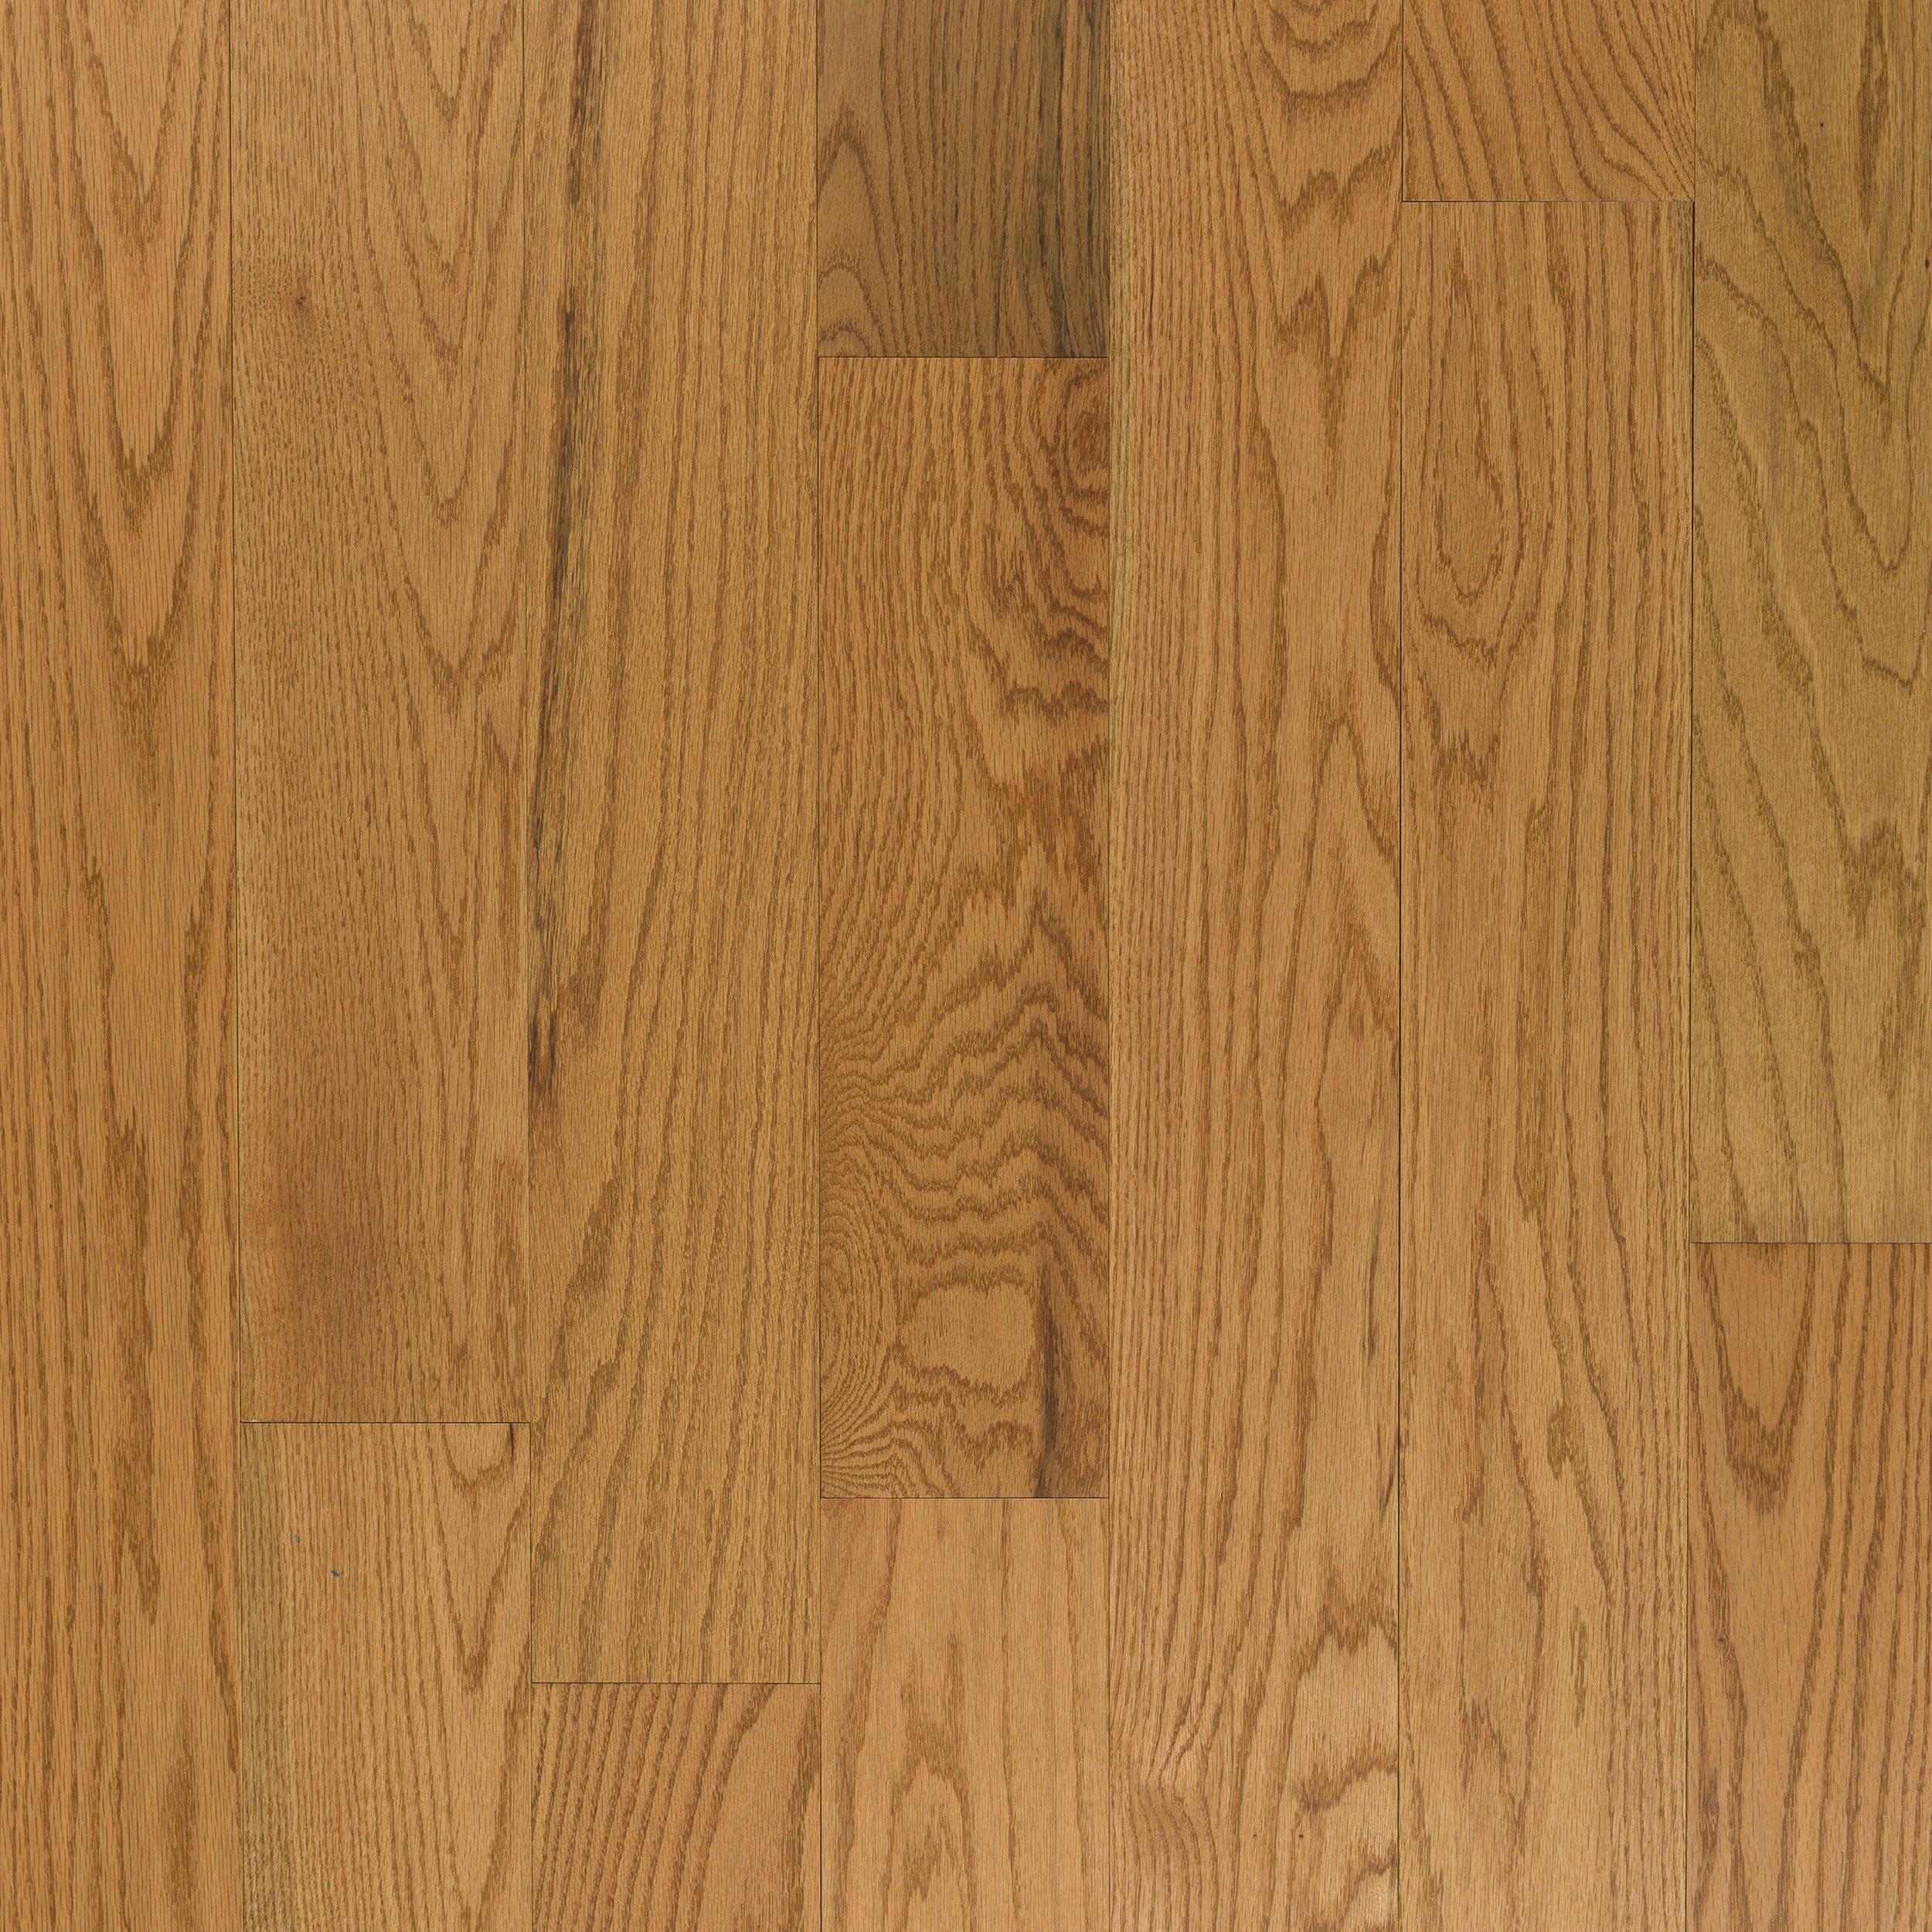 Frontier Oak Smooth Solid Hardwood, Floor And Decor Unfinished Hardwood